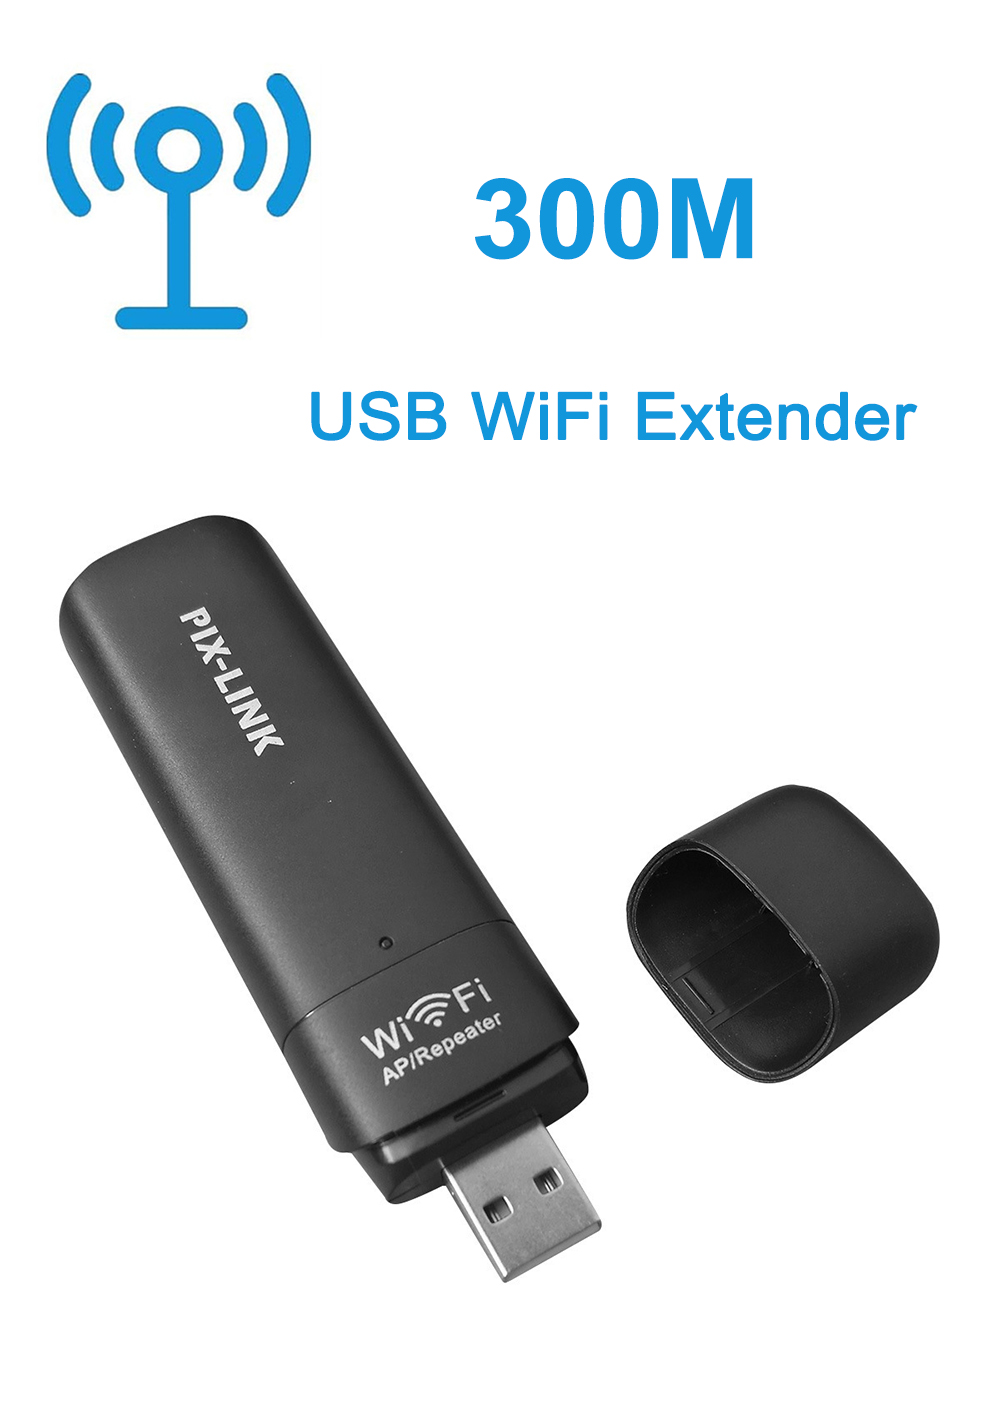 PIXLINK-300M-USB-WiFi-Extender-Signal-Booster-Wireless-Range-Repeater-Wireless-AP-Amplifier-Ethernet-1775570-1